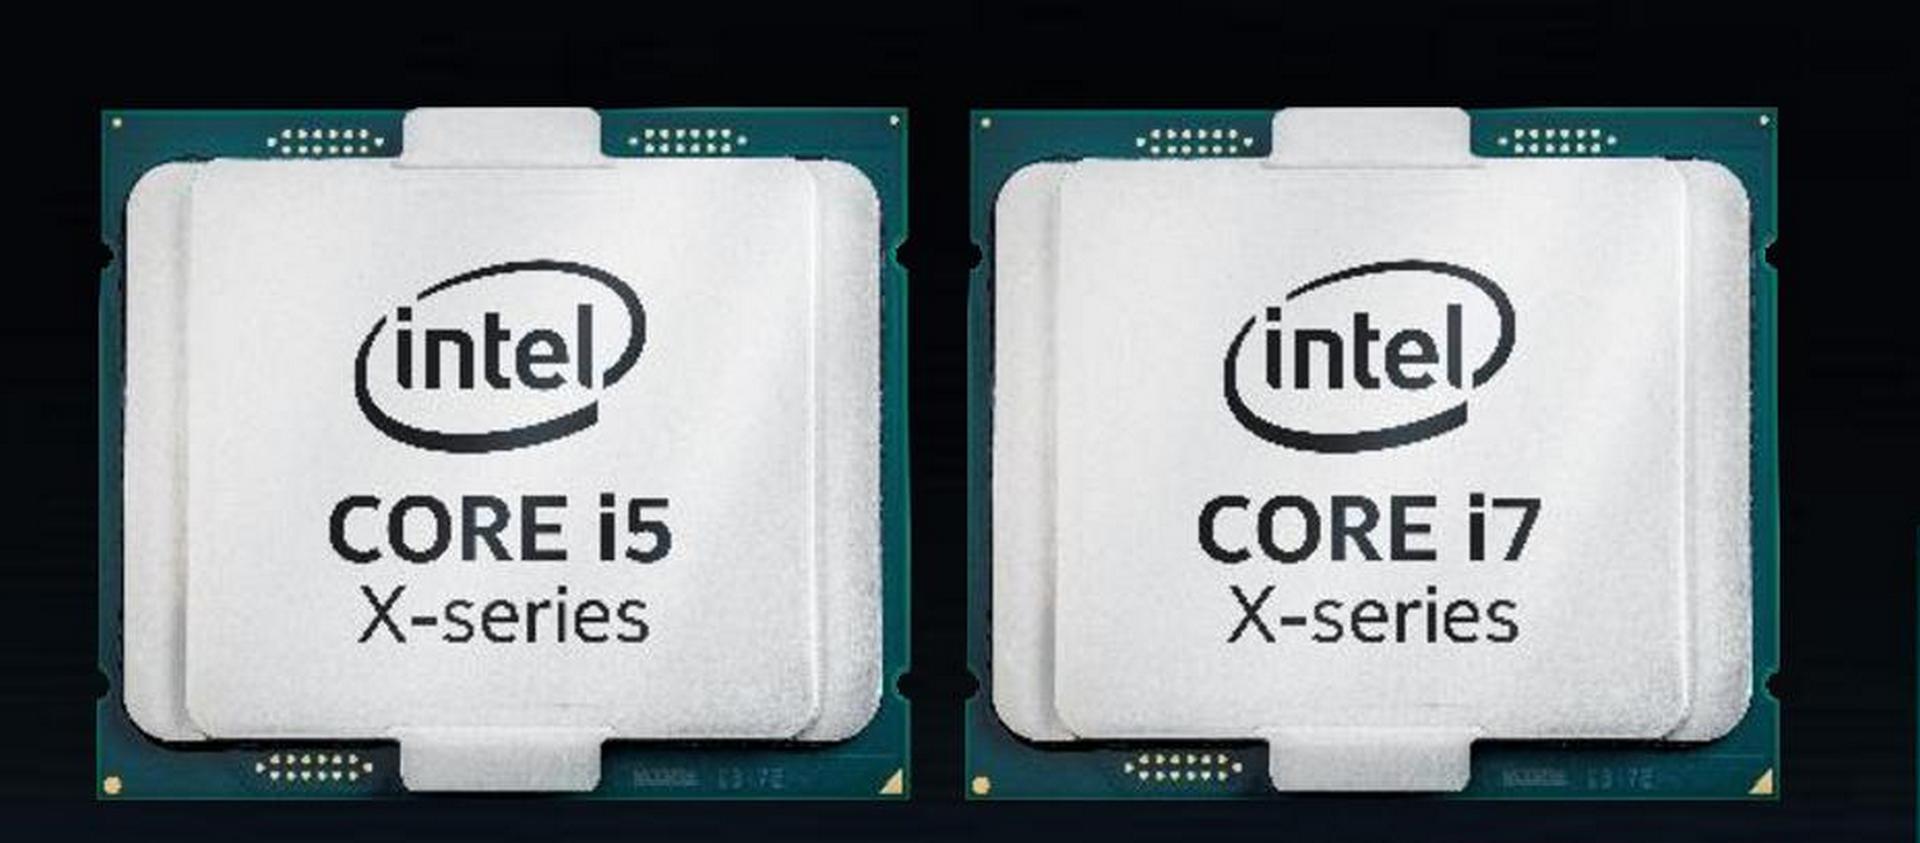 Intel 10 series. Процессор i9 x Series. Intel Core i7 7800x. Skylake-s процессоры. Intel Core x.